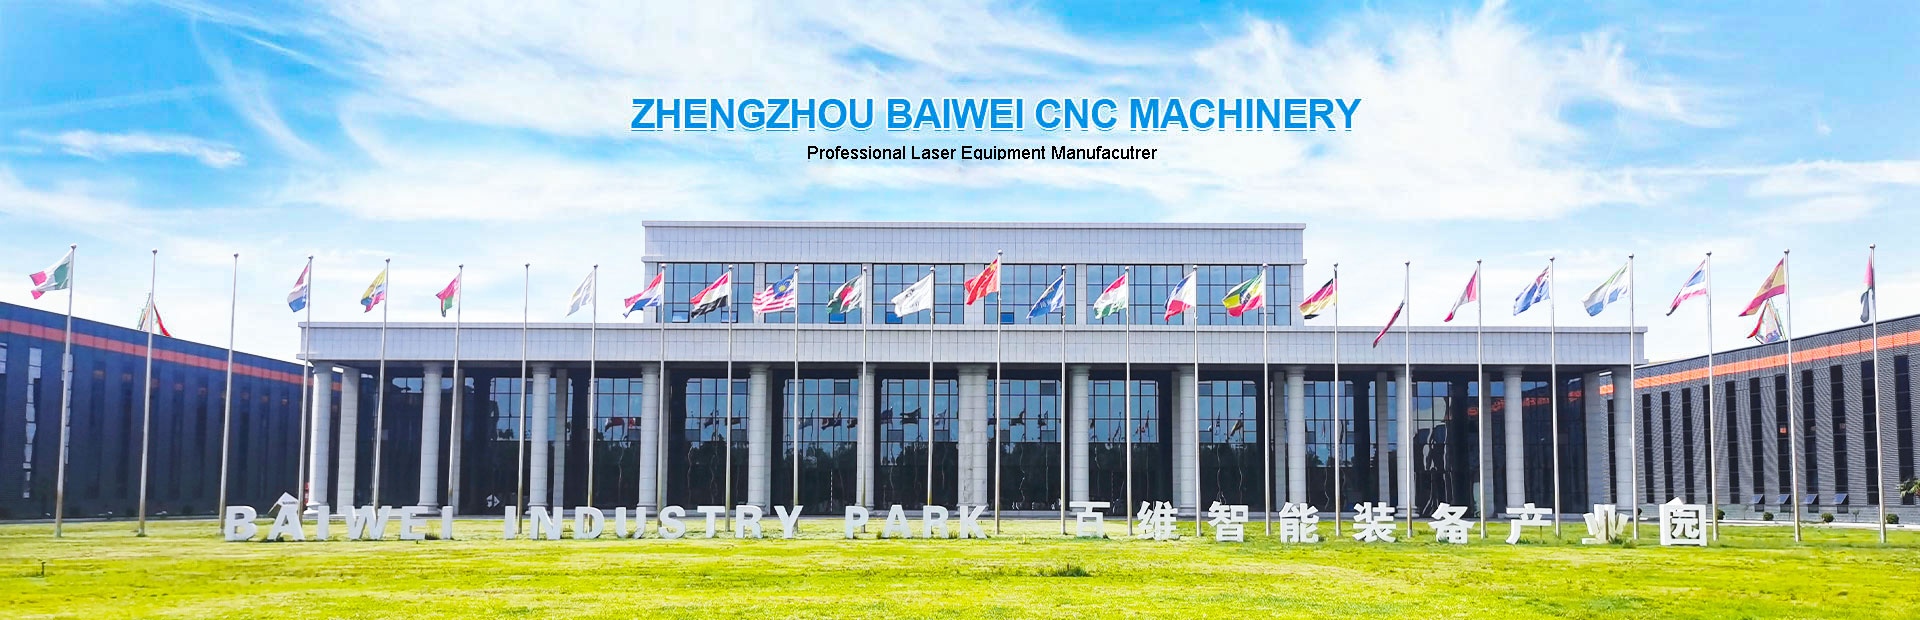 Products - Baiwei CNC